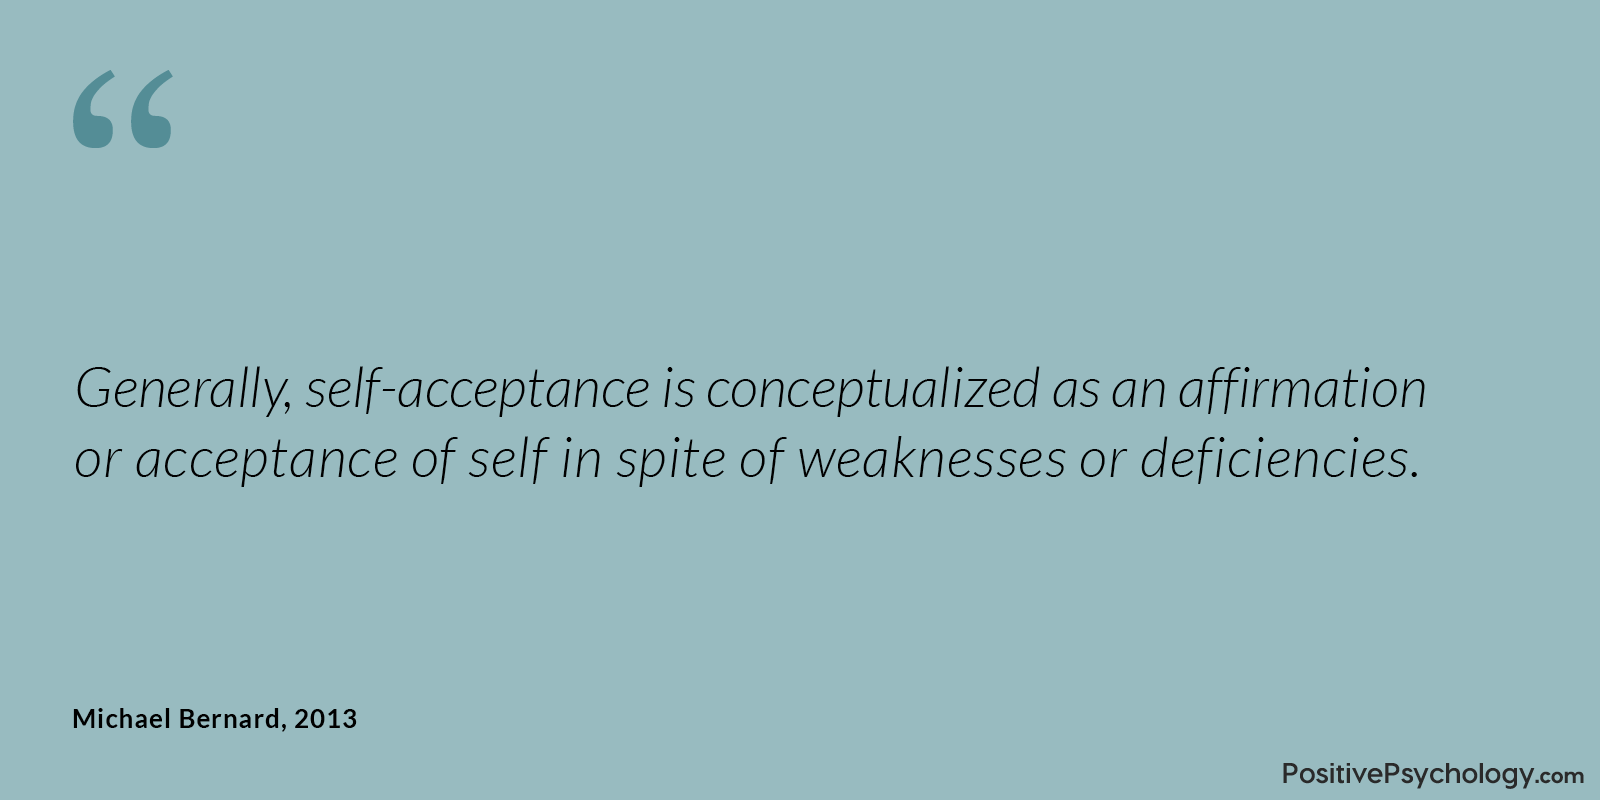 Affirmation or Acceptance of Self